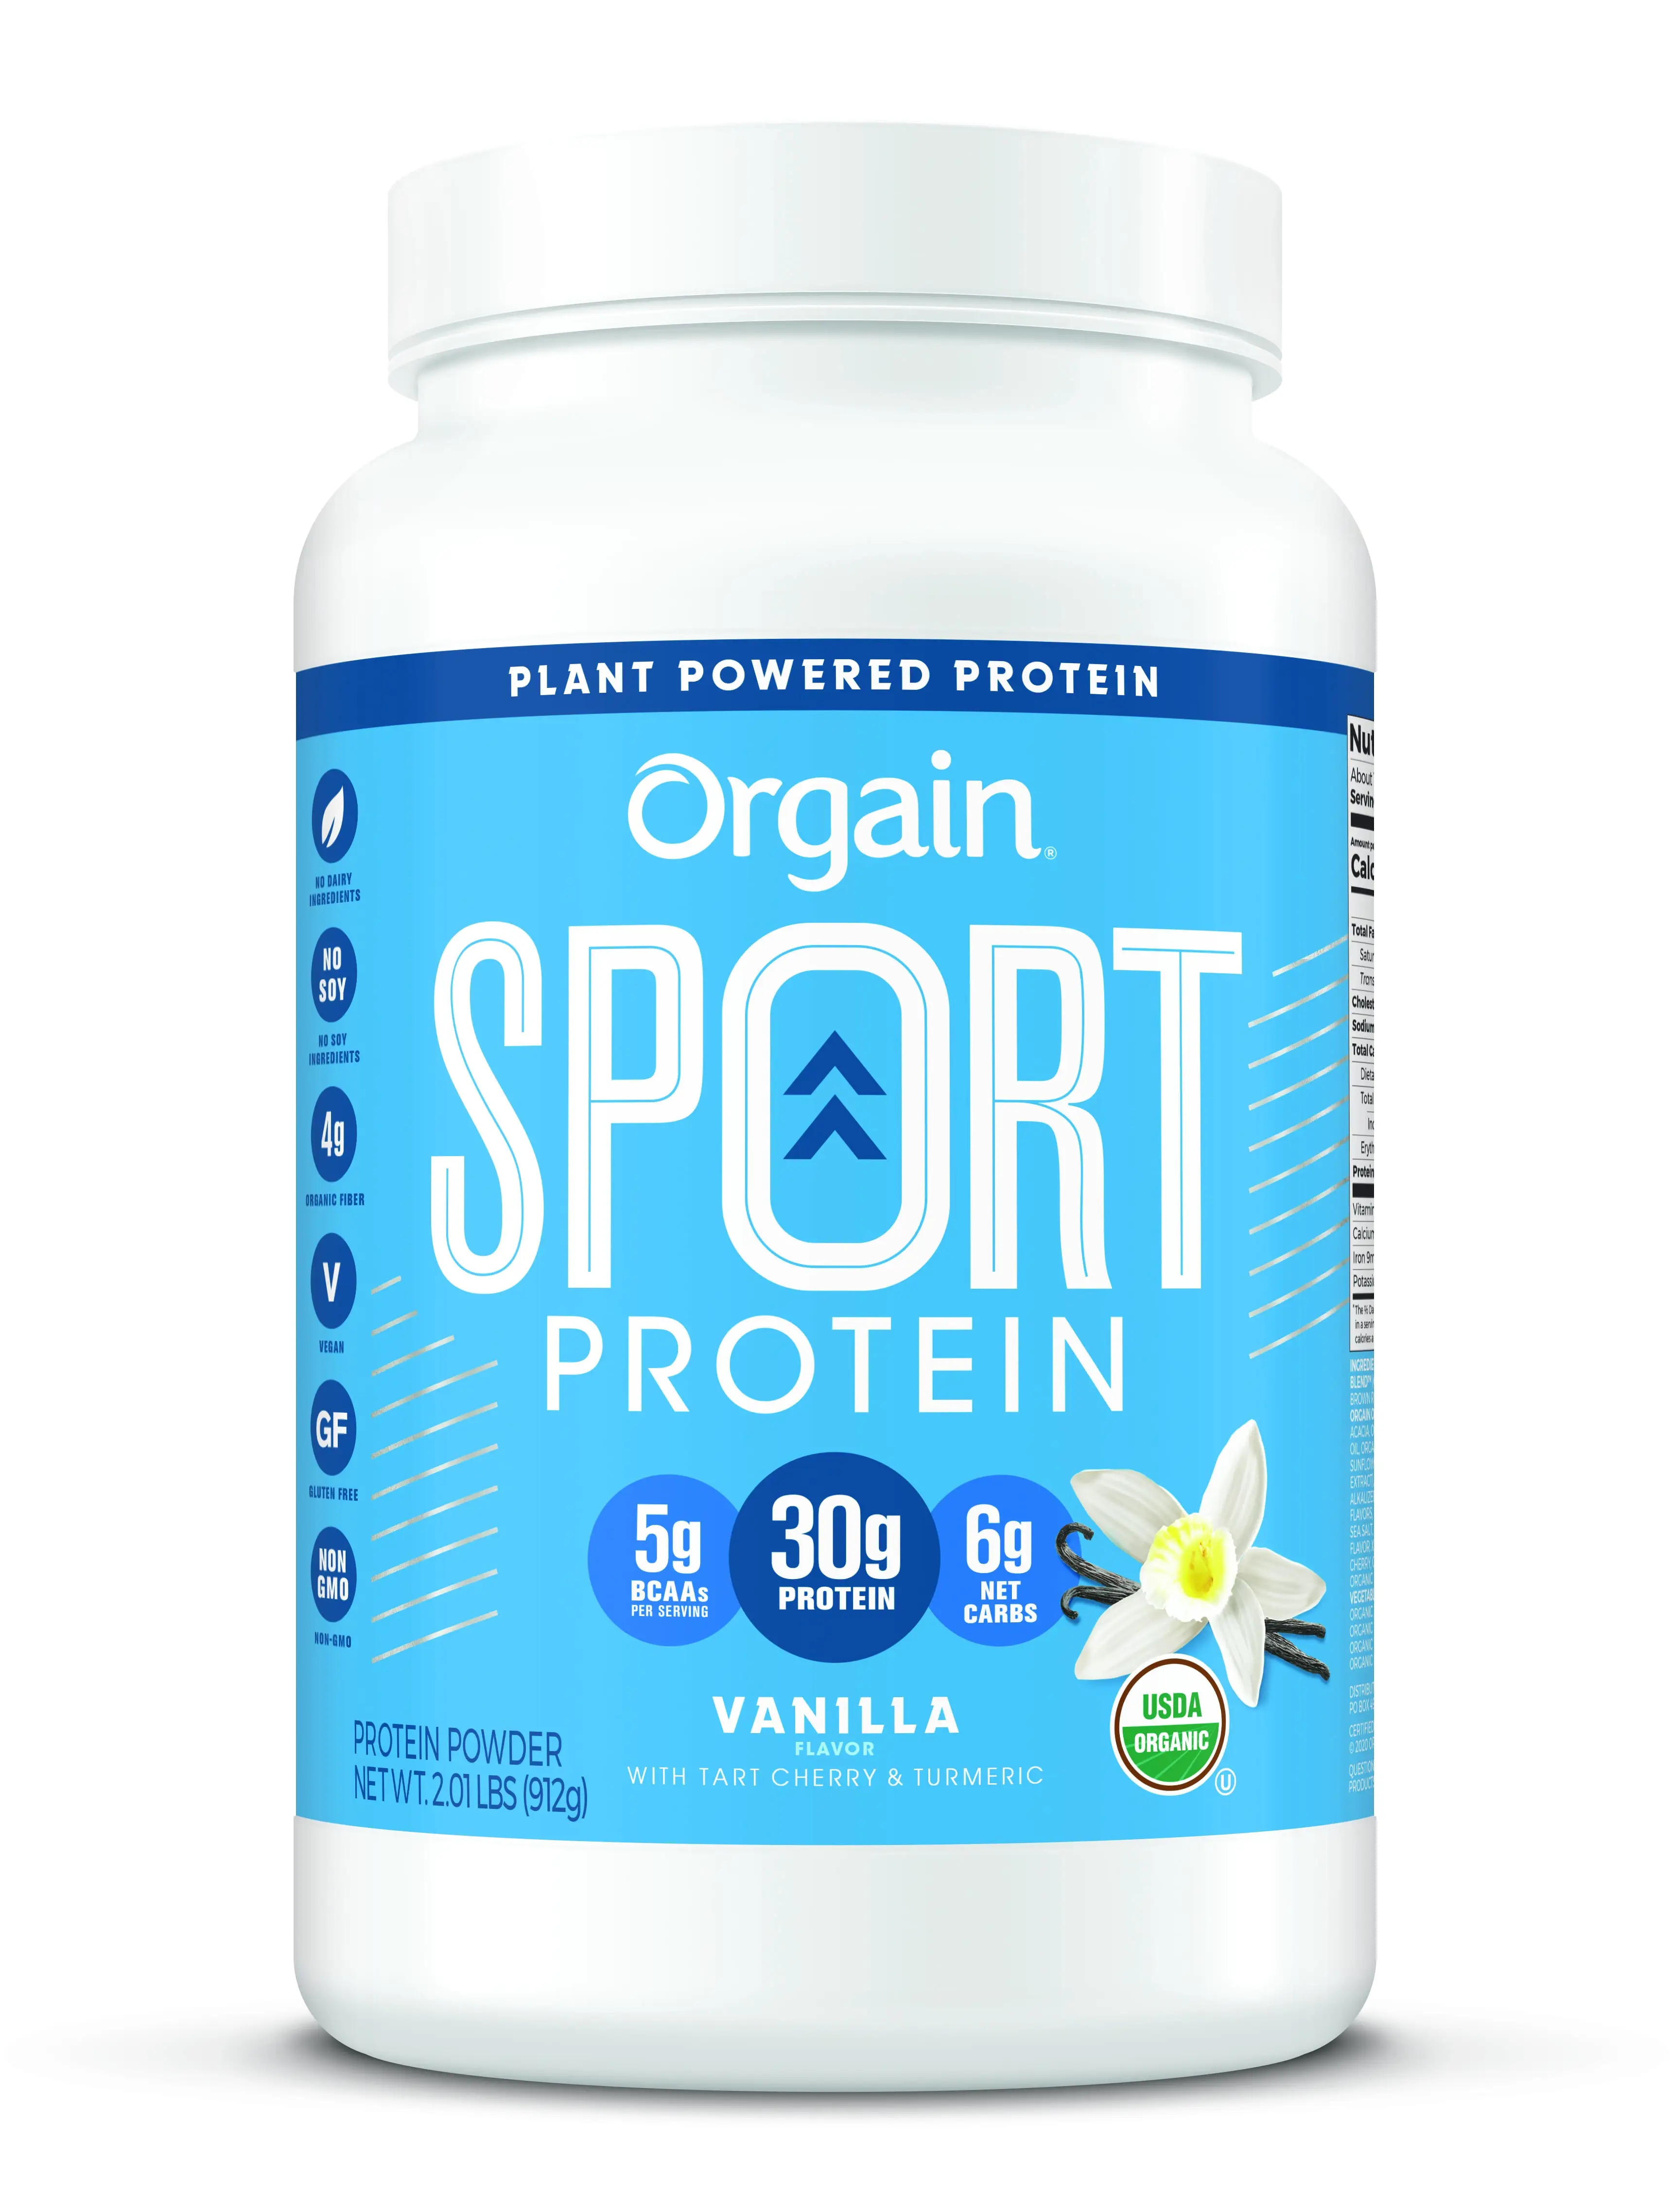 What is Orgain Protein Powder?